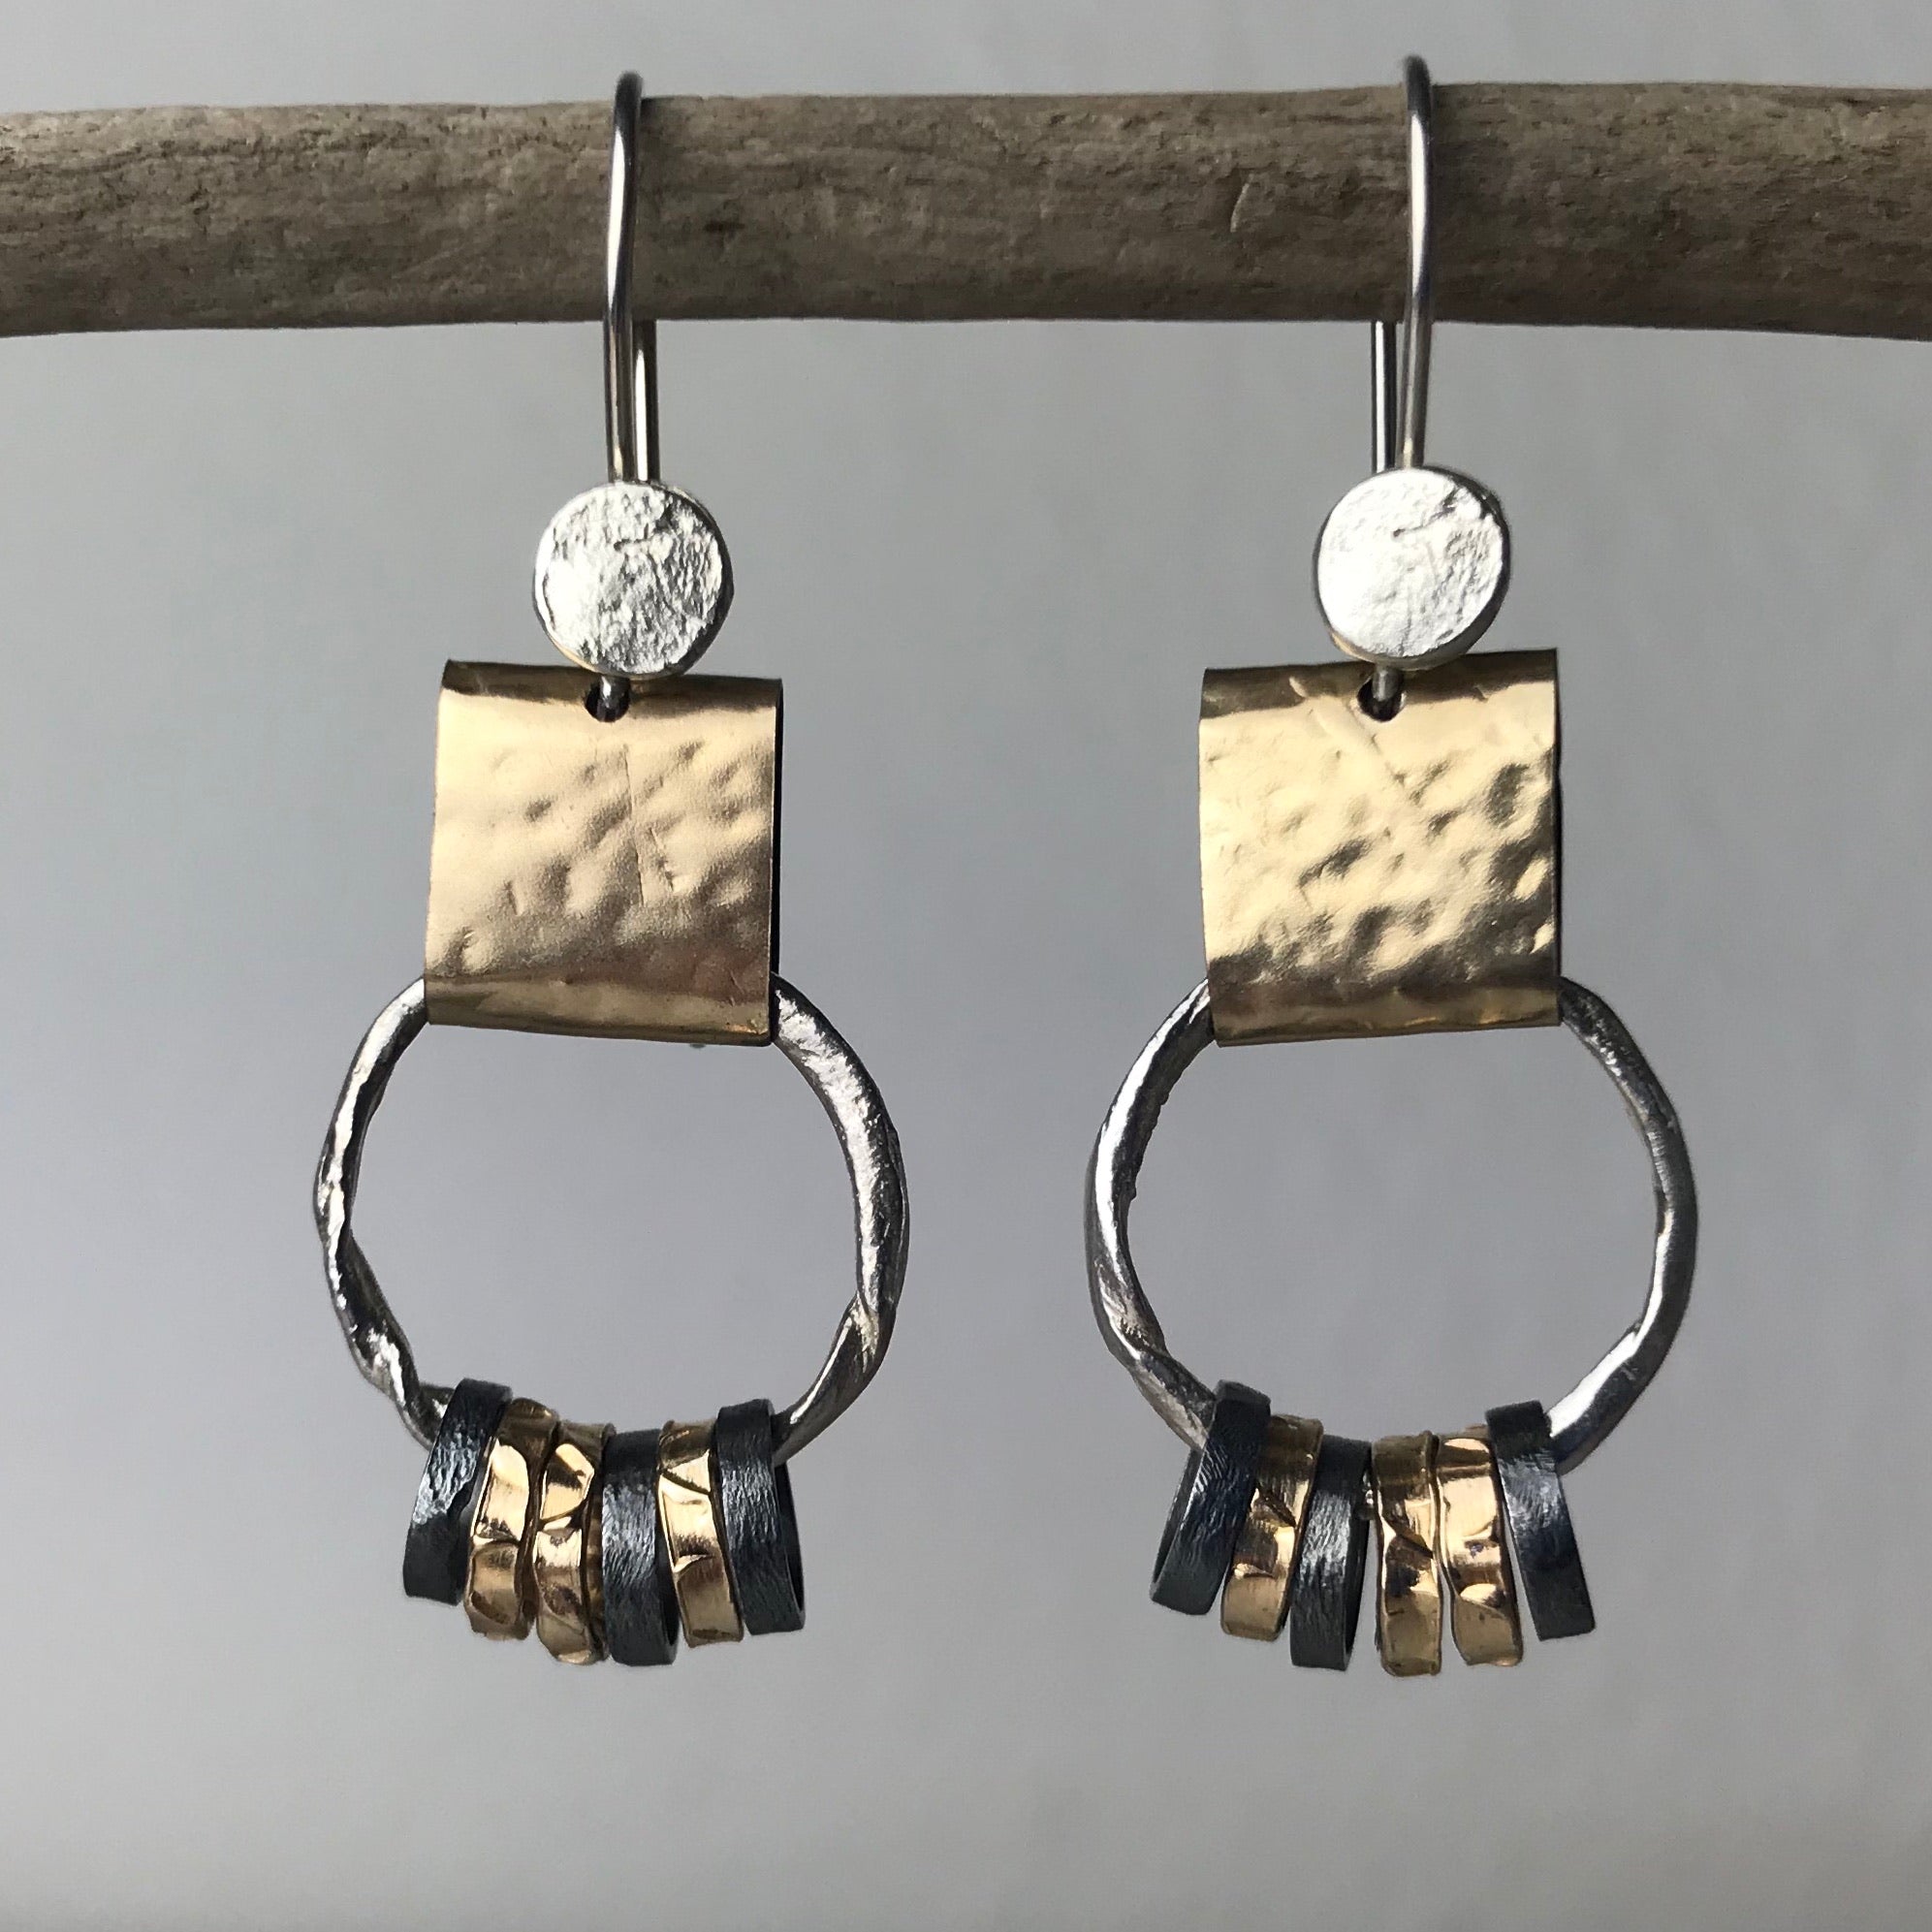 Mixed Metal Hoop Charm Earrings - The Nancy Smillie Shop - Art, Jewellery & Designer Gifts Glasgow